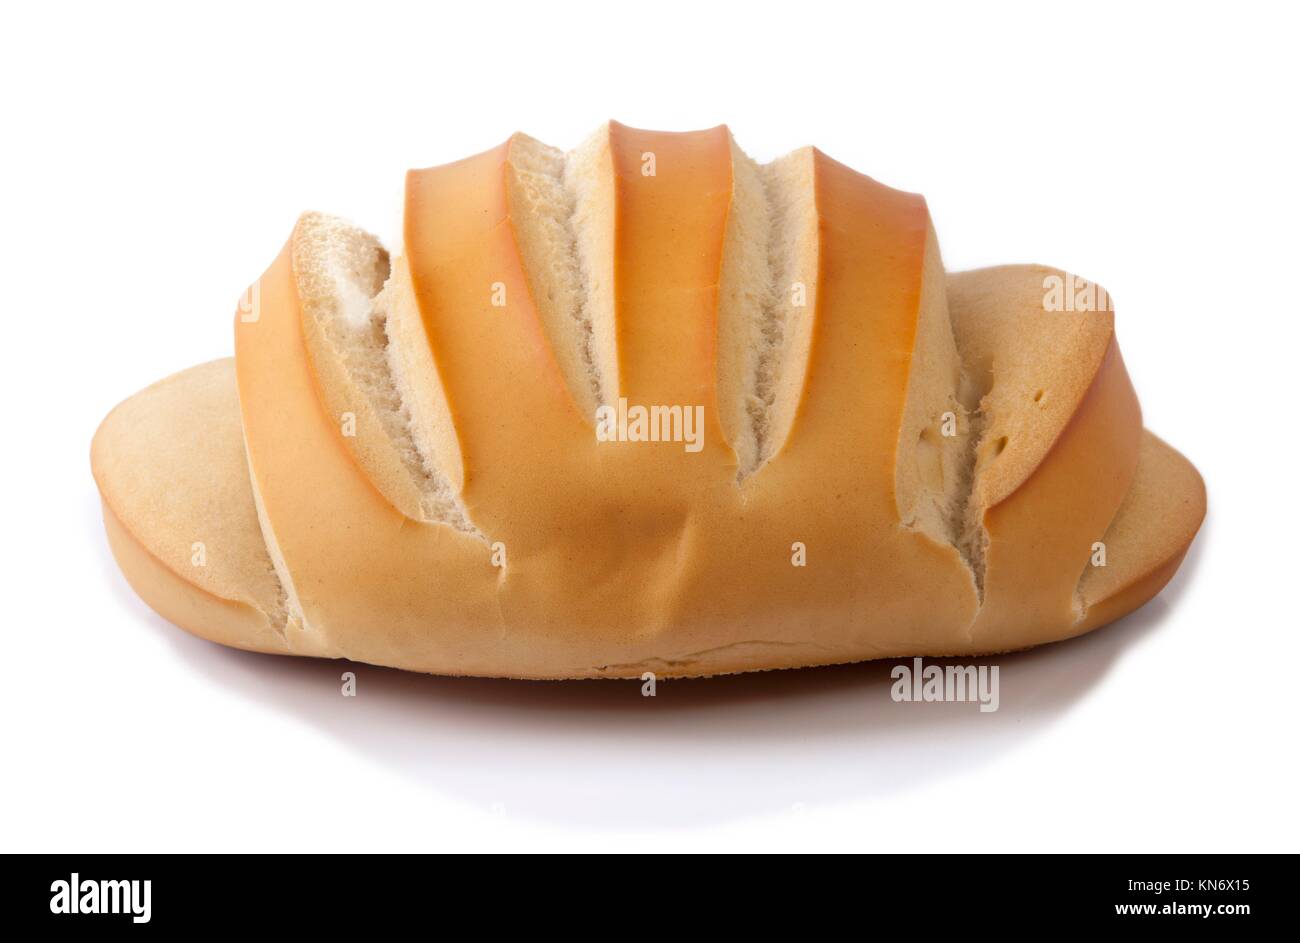 Español un kilo de pan pan. Aislado sobre fondo blanco. Vista lateral. Foto de stock